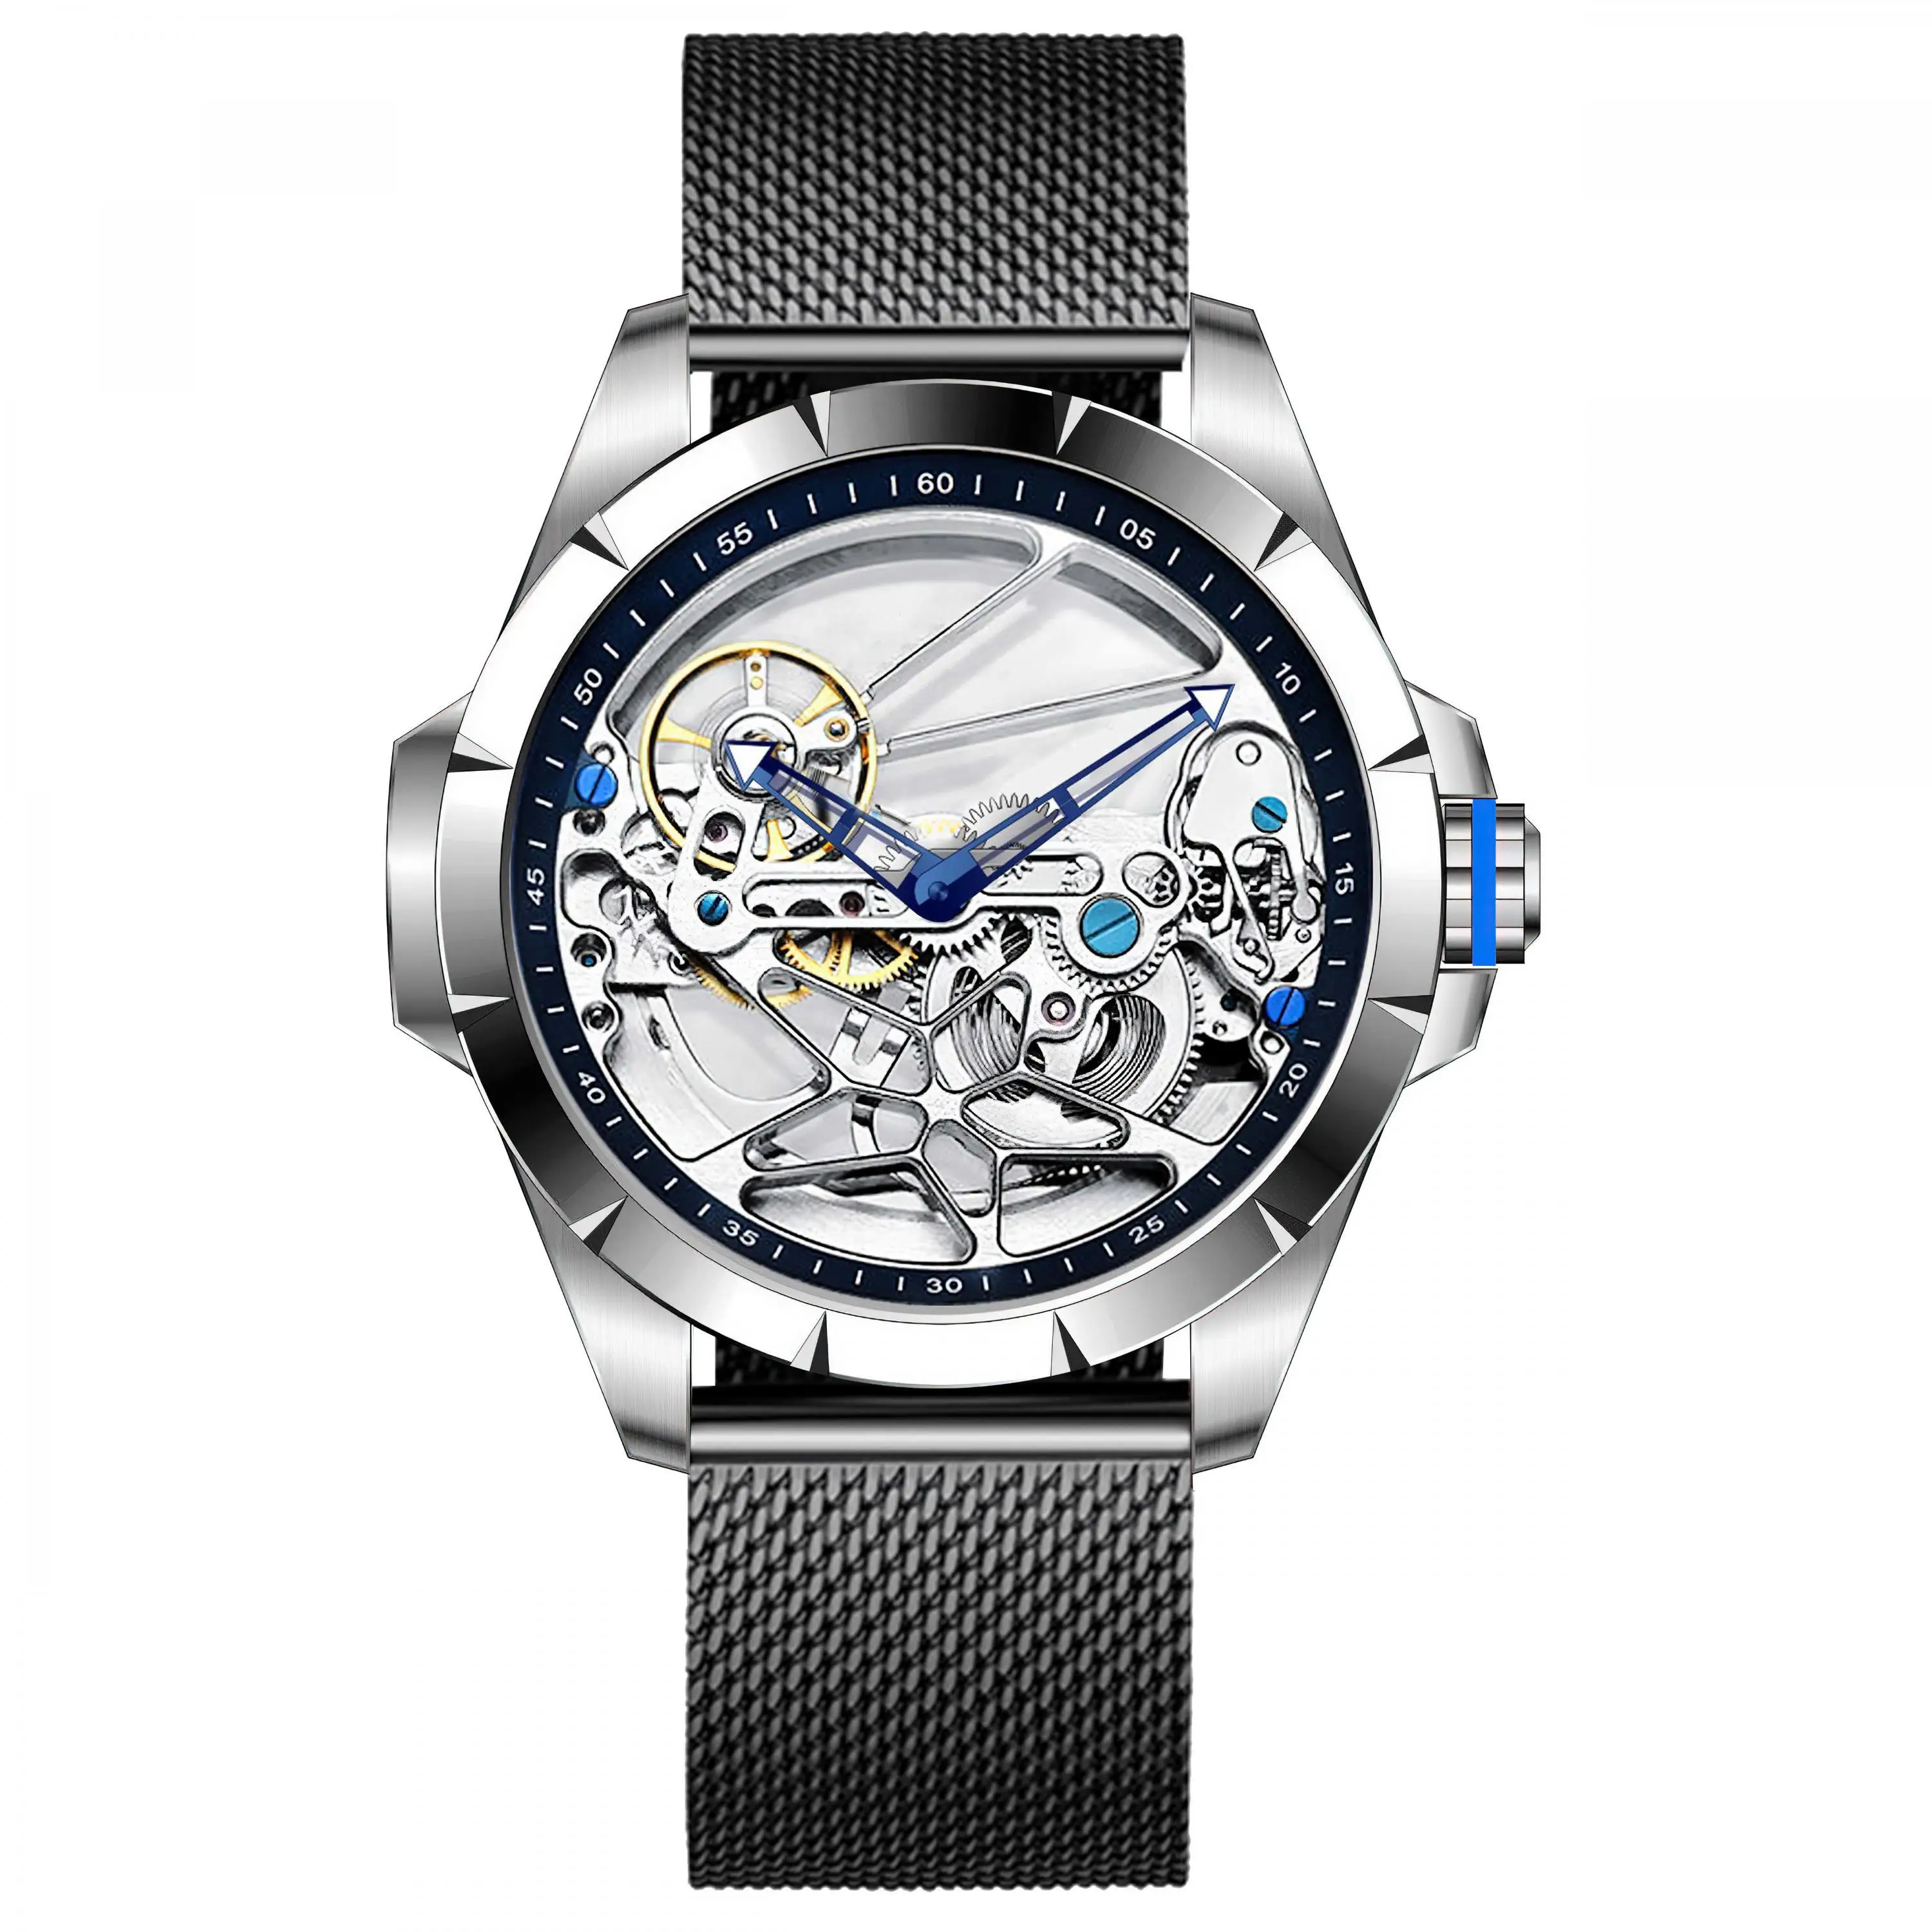 Genuine Tourbillon Watches Men Mechanical Watch Fully Automatic luxury Brands Luminous waterproof fashion MAN WATCH Reloj Hombre 